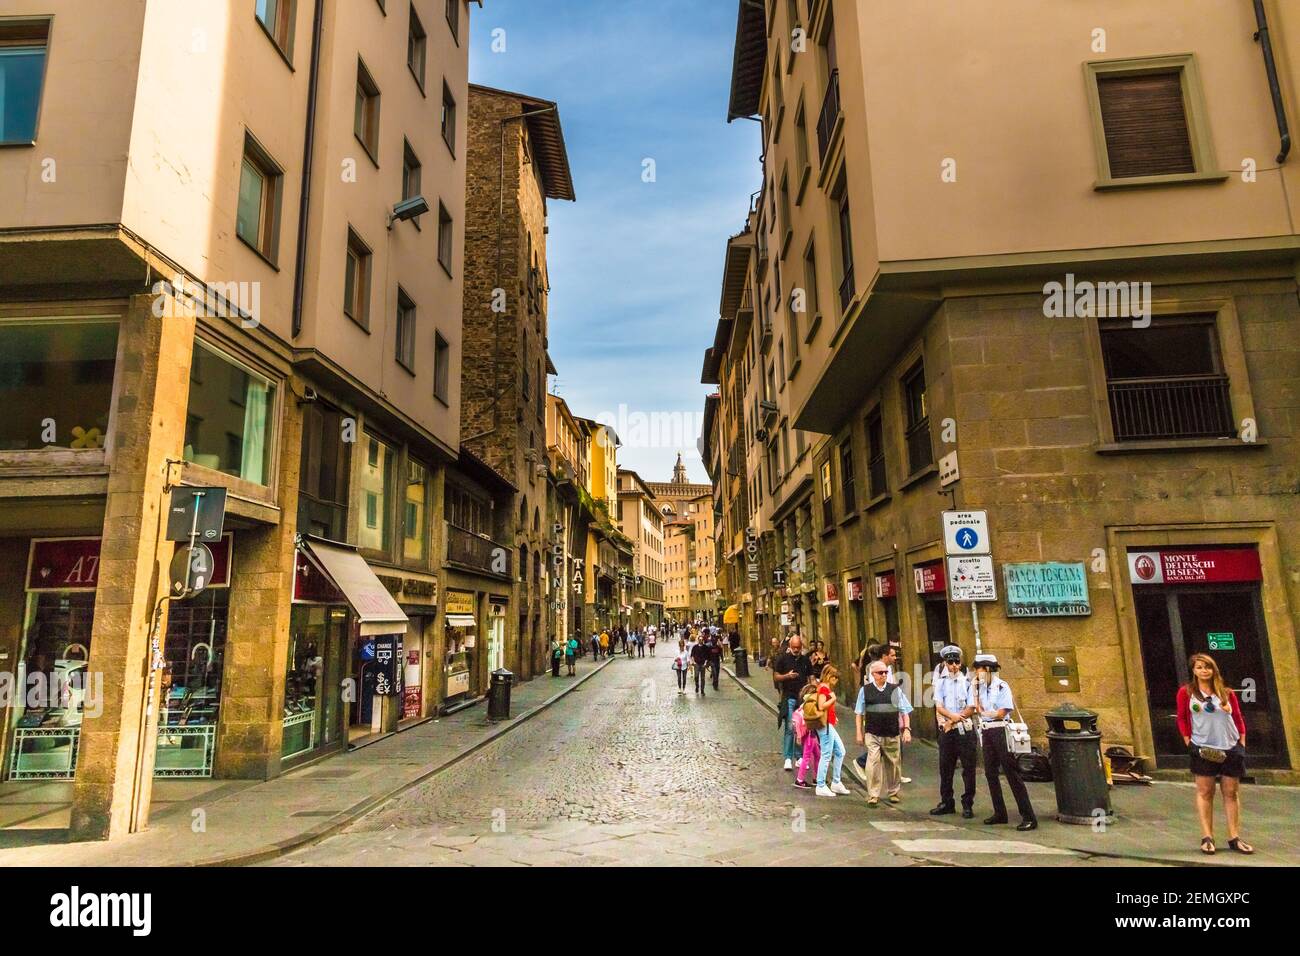 Nice street view of Via Por Santa Maria near the bridge Ponte Vecchio of the historic city centre of Florence, Italy. People are walking on the... Stock Photo